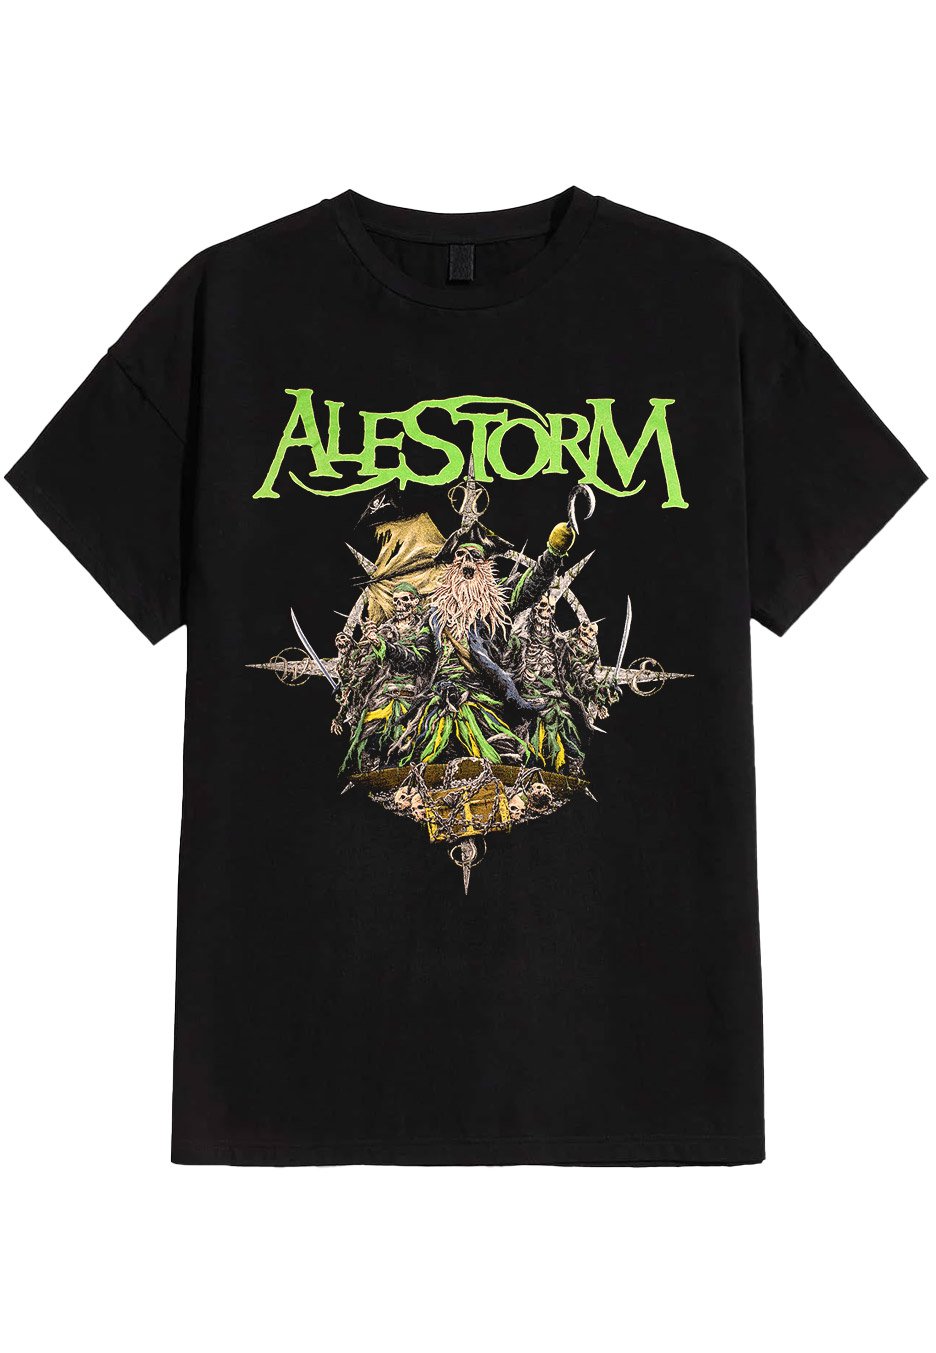 Alestorm - Voyage Of The Dead Marauder - T-Shirt